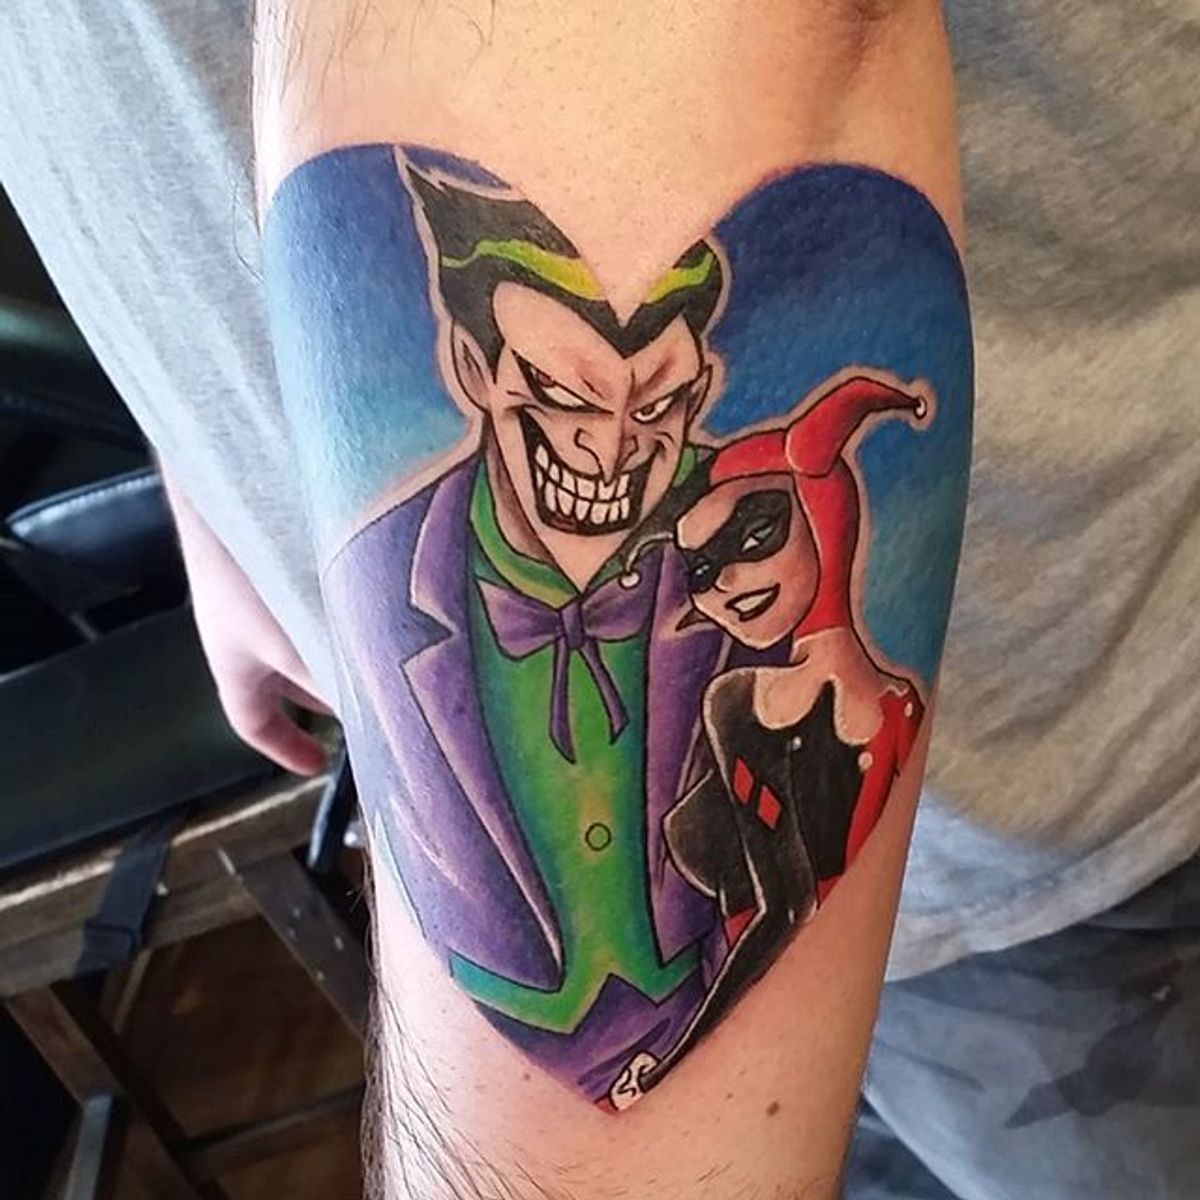 Tattoo uploaded by Robert Davies • Joker and Harley Quinn Tattoo by Tost  Tattoos #Joker #HarleyQuinn #JokerandHarley #JokerTattoo #HarleyQuinnTattoo  #Batman #ComicCouples #ComicTattoo #DC #TostTattoos • Tattoodo